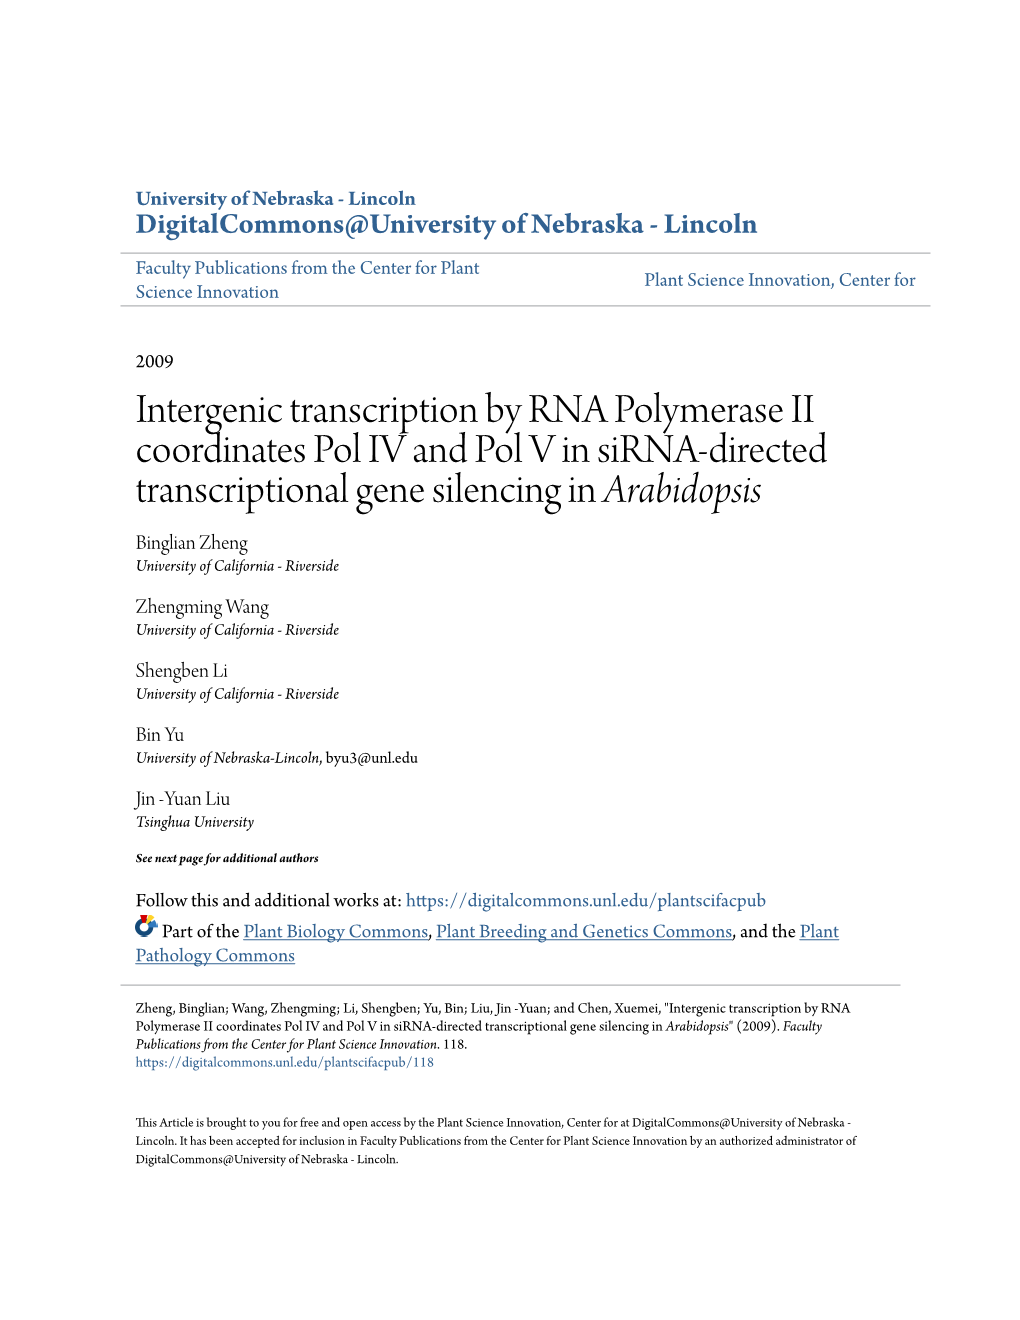 Intergenic Transcription by RNA Polymerase II Coordinates Pol IV